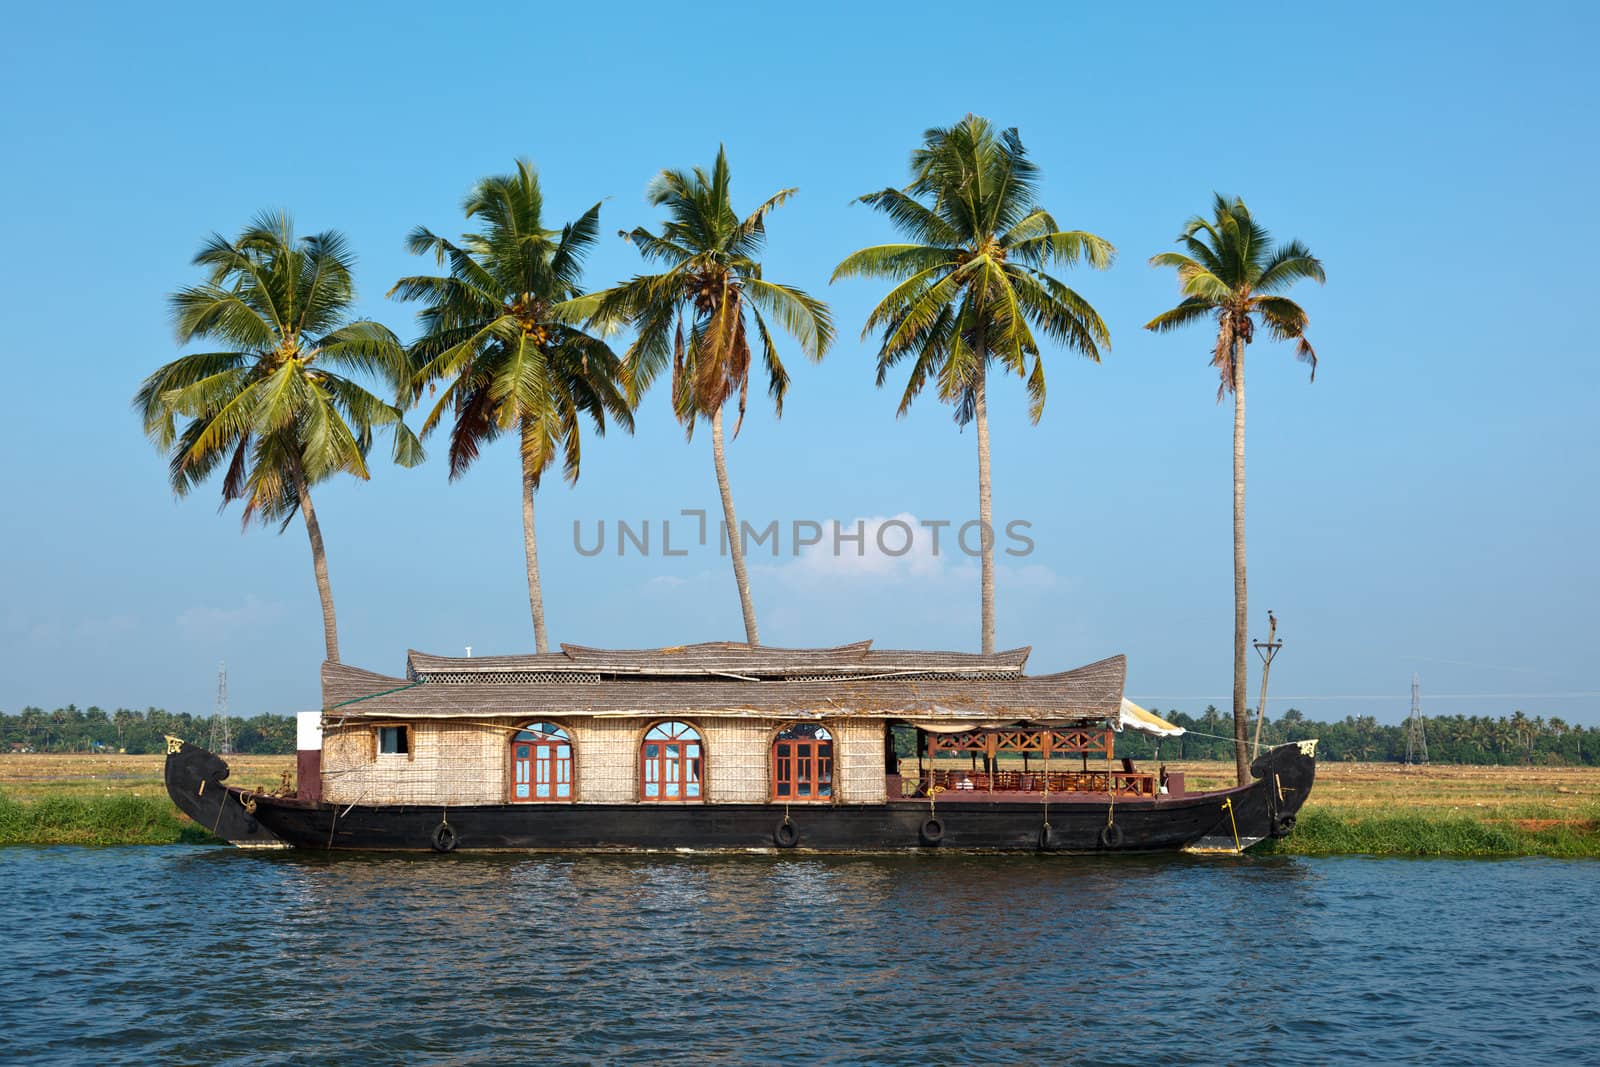 Houseboat on Kerala backwaters, India by dimol